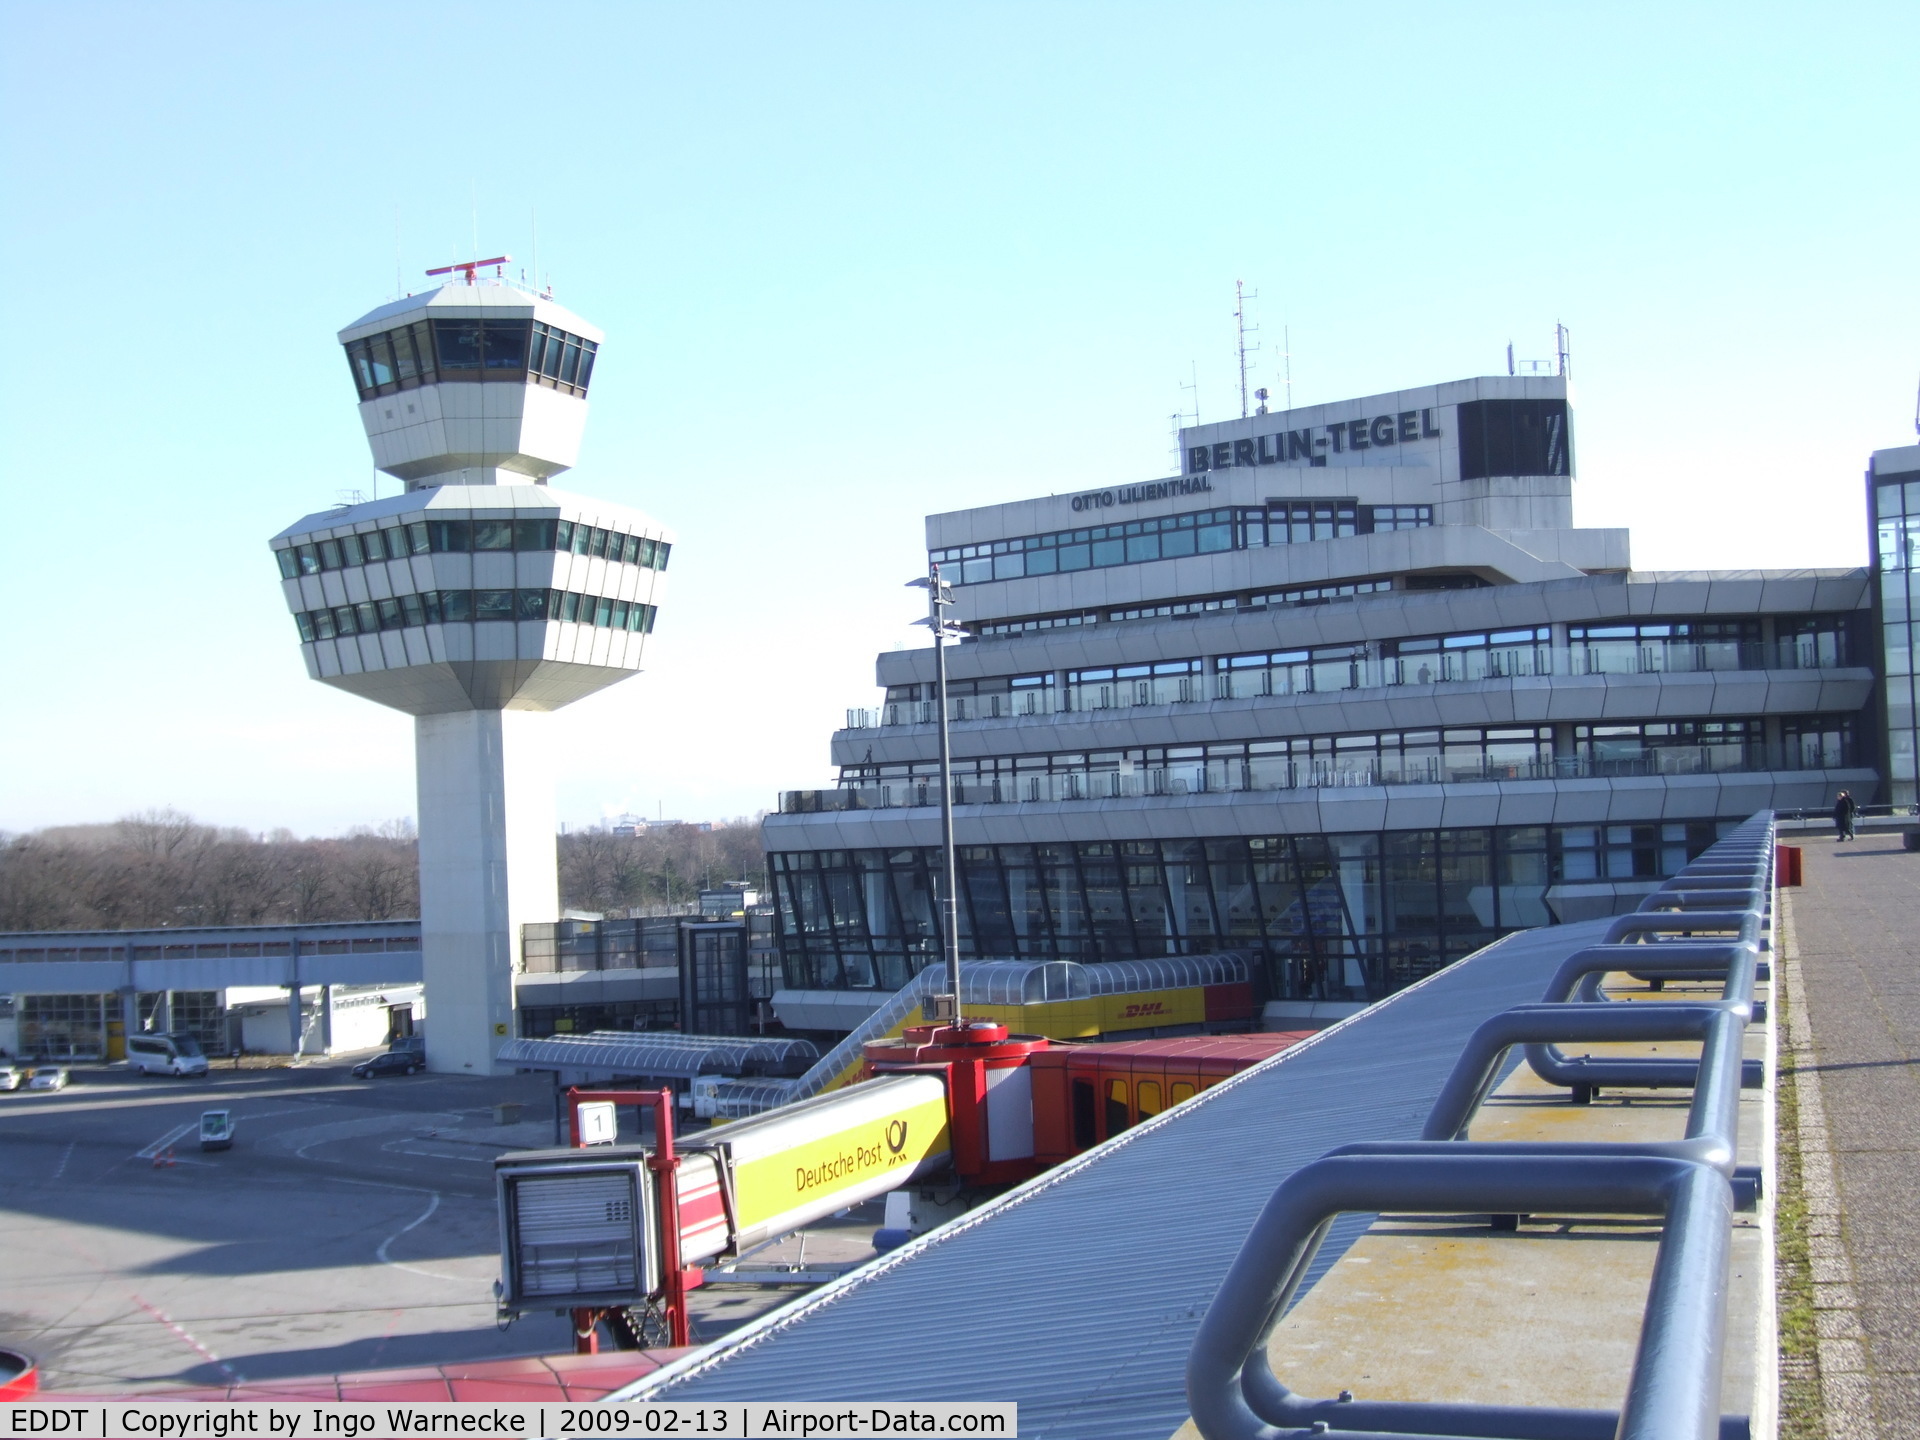 Tegel International Airport (closing in 2011), Berlin Germany (EDDT) - Berlin Tegel, Tower and adjacent terminal building